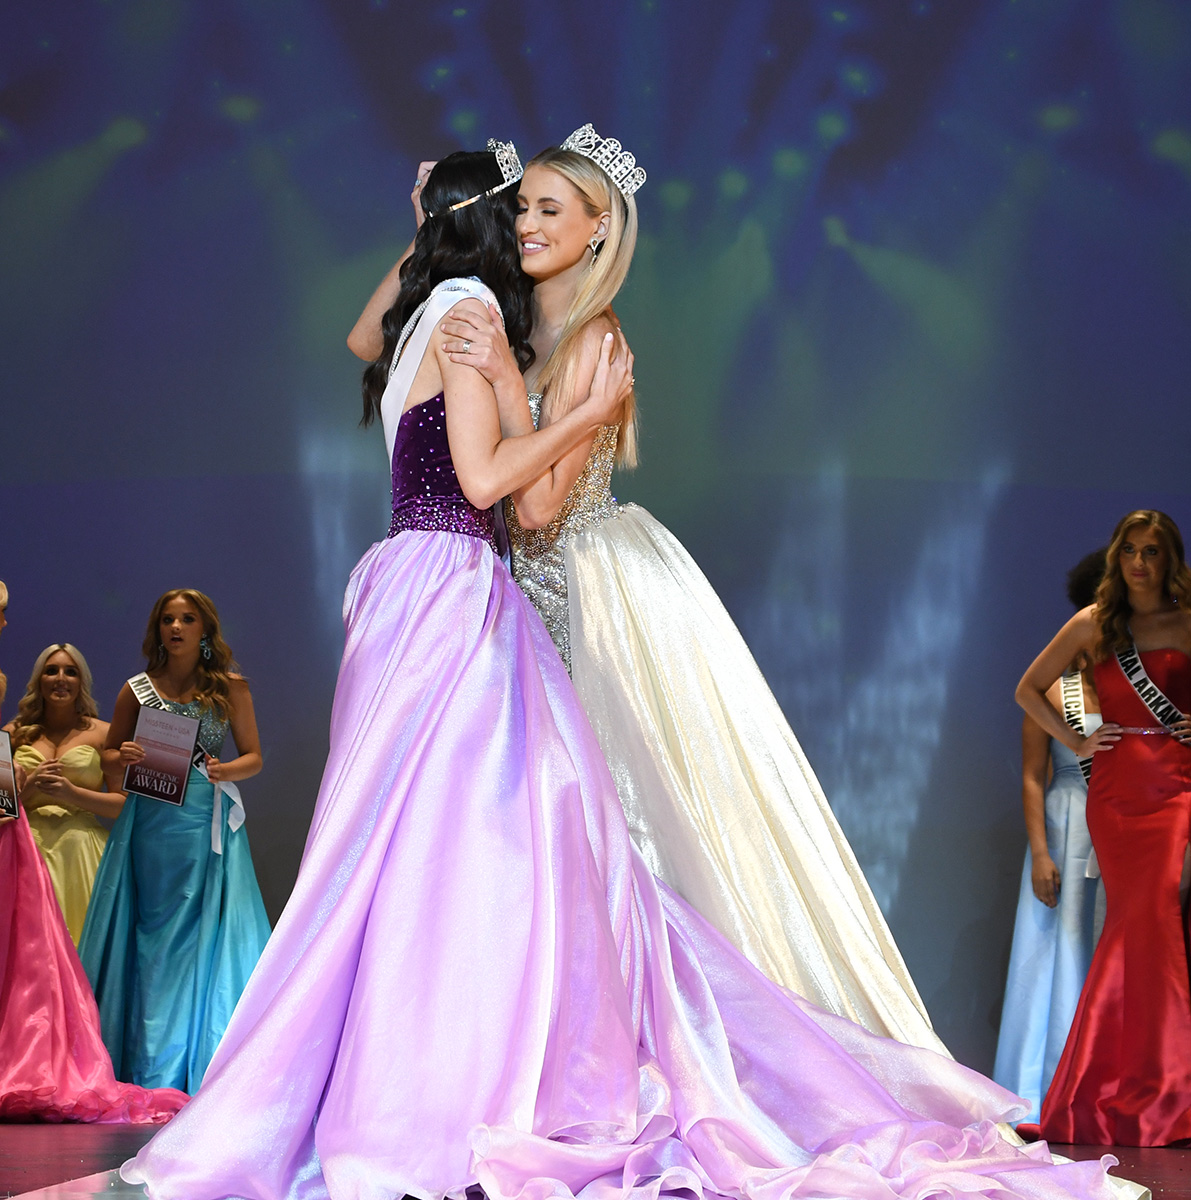 Miss Arkansas Teen USA 2022 Allie Shanks hugs Miss Arkansas Teen USA 2021 Madeline Bohlman